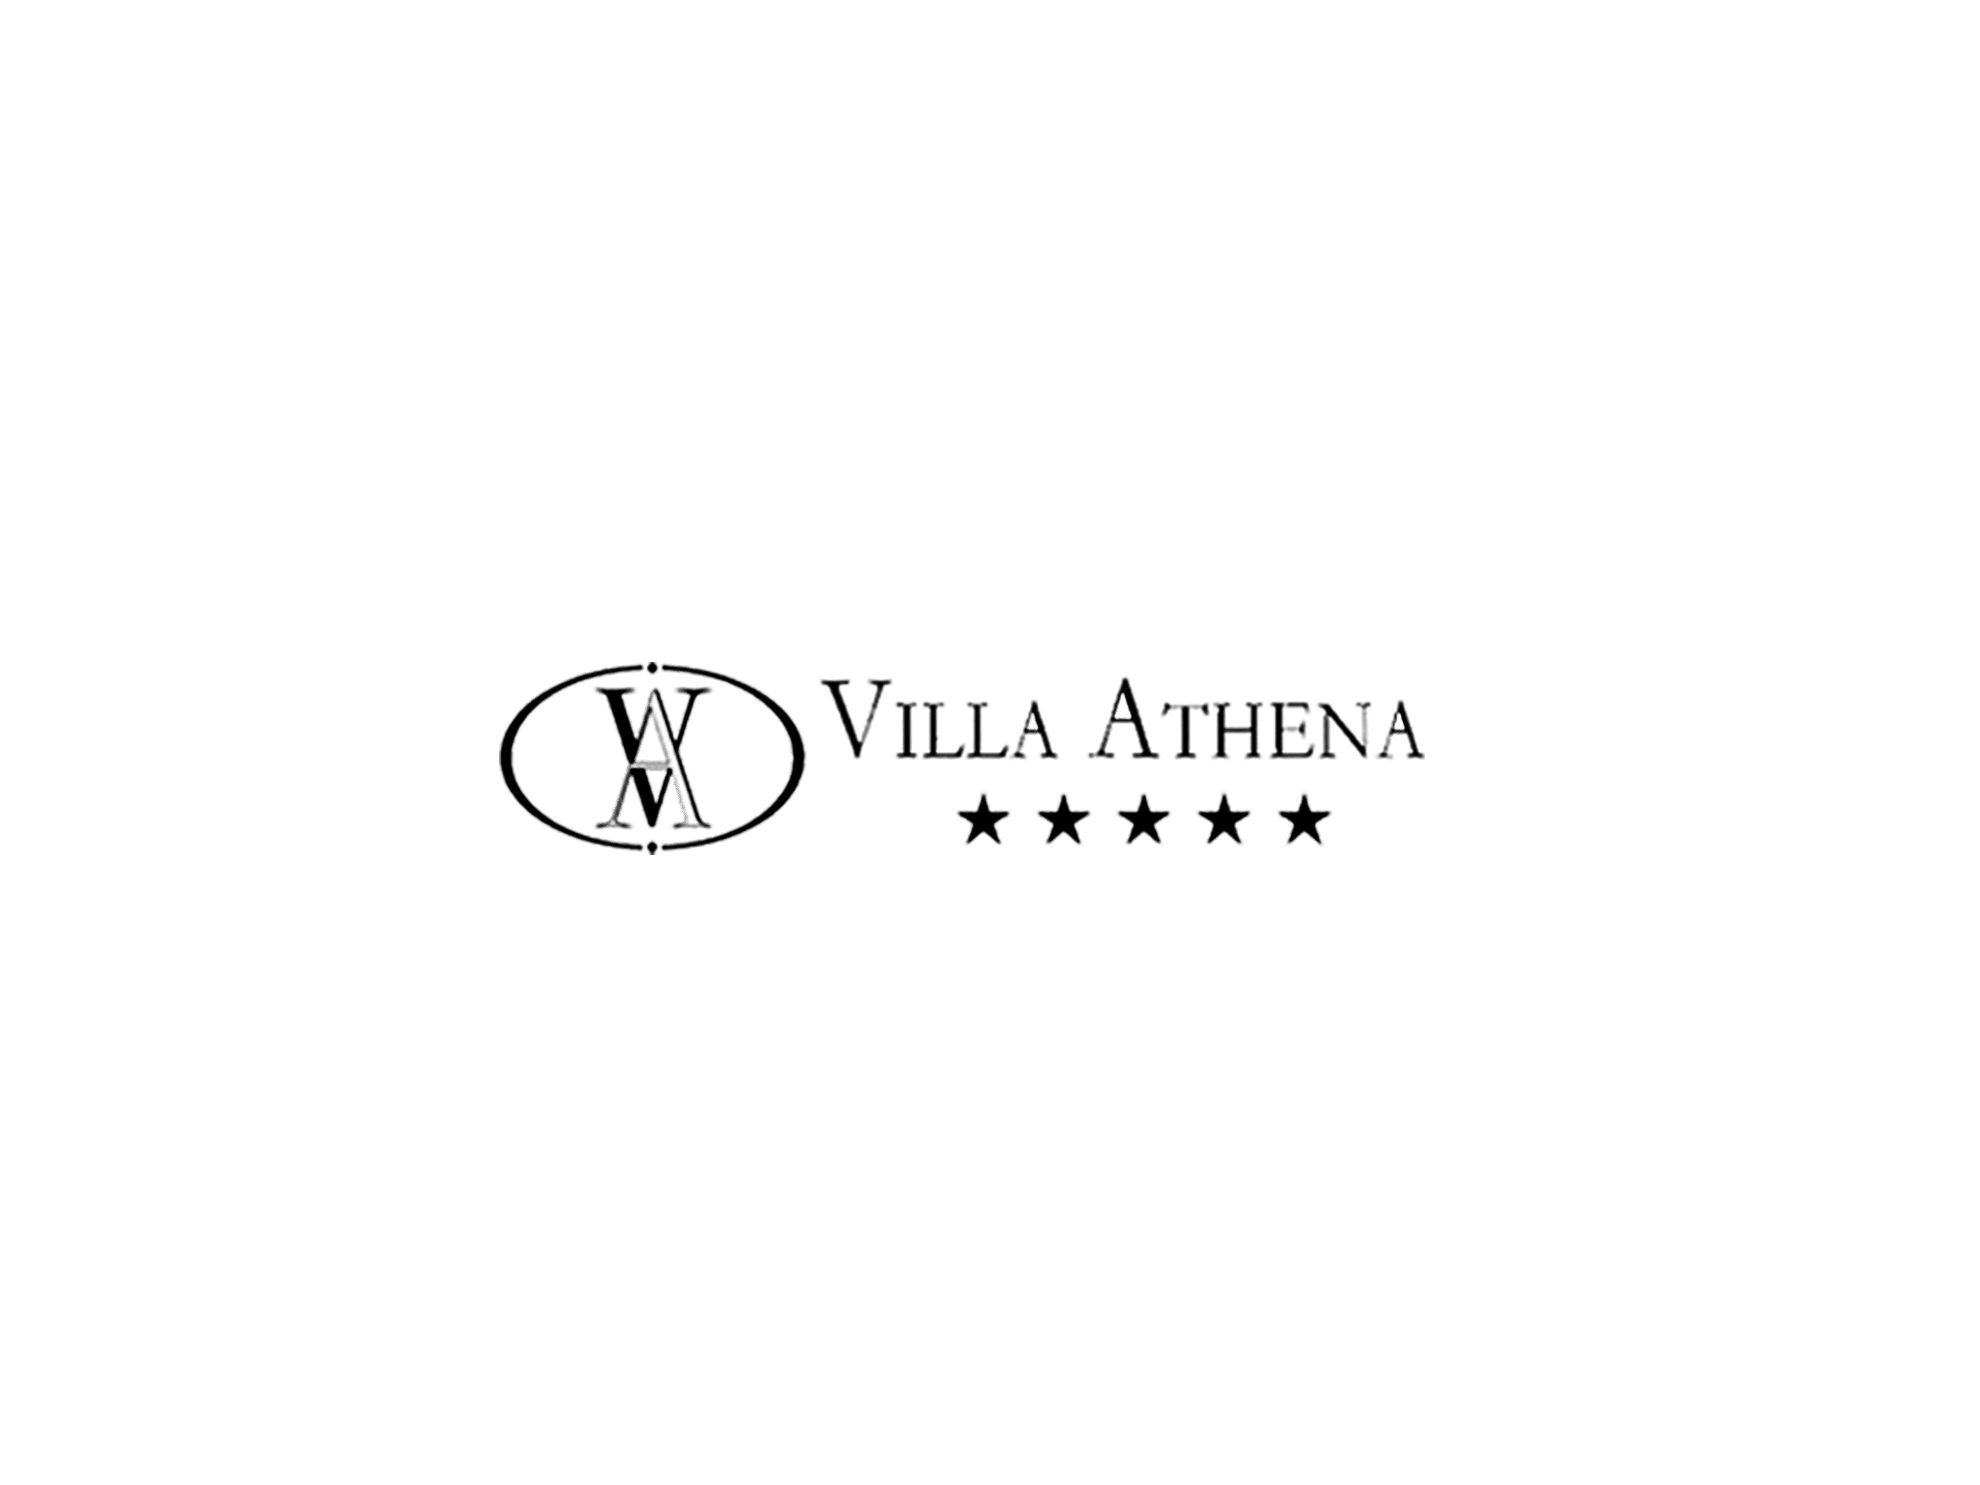 villa athena - lascia - communication agency Milan